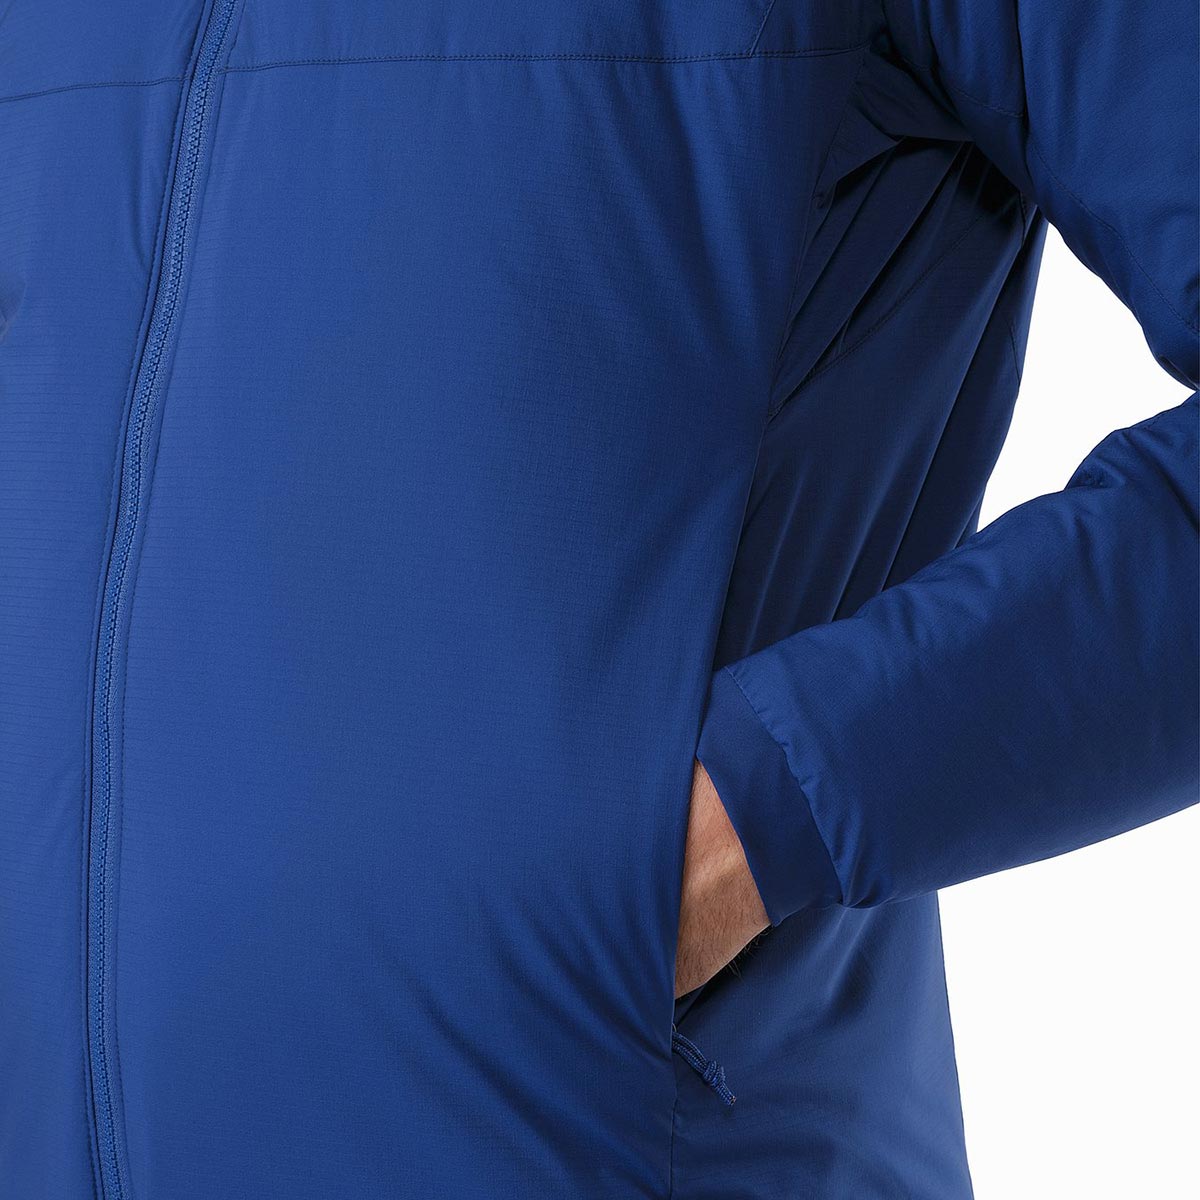 Arc'teryx Atom AR Jacket, men's, discontinued Fall 2018 colors (free ...